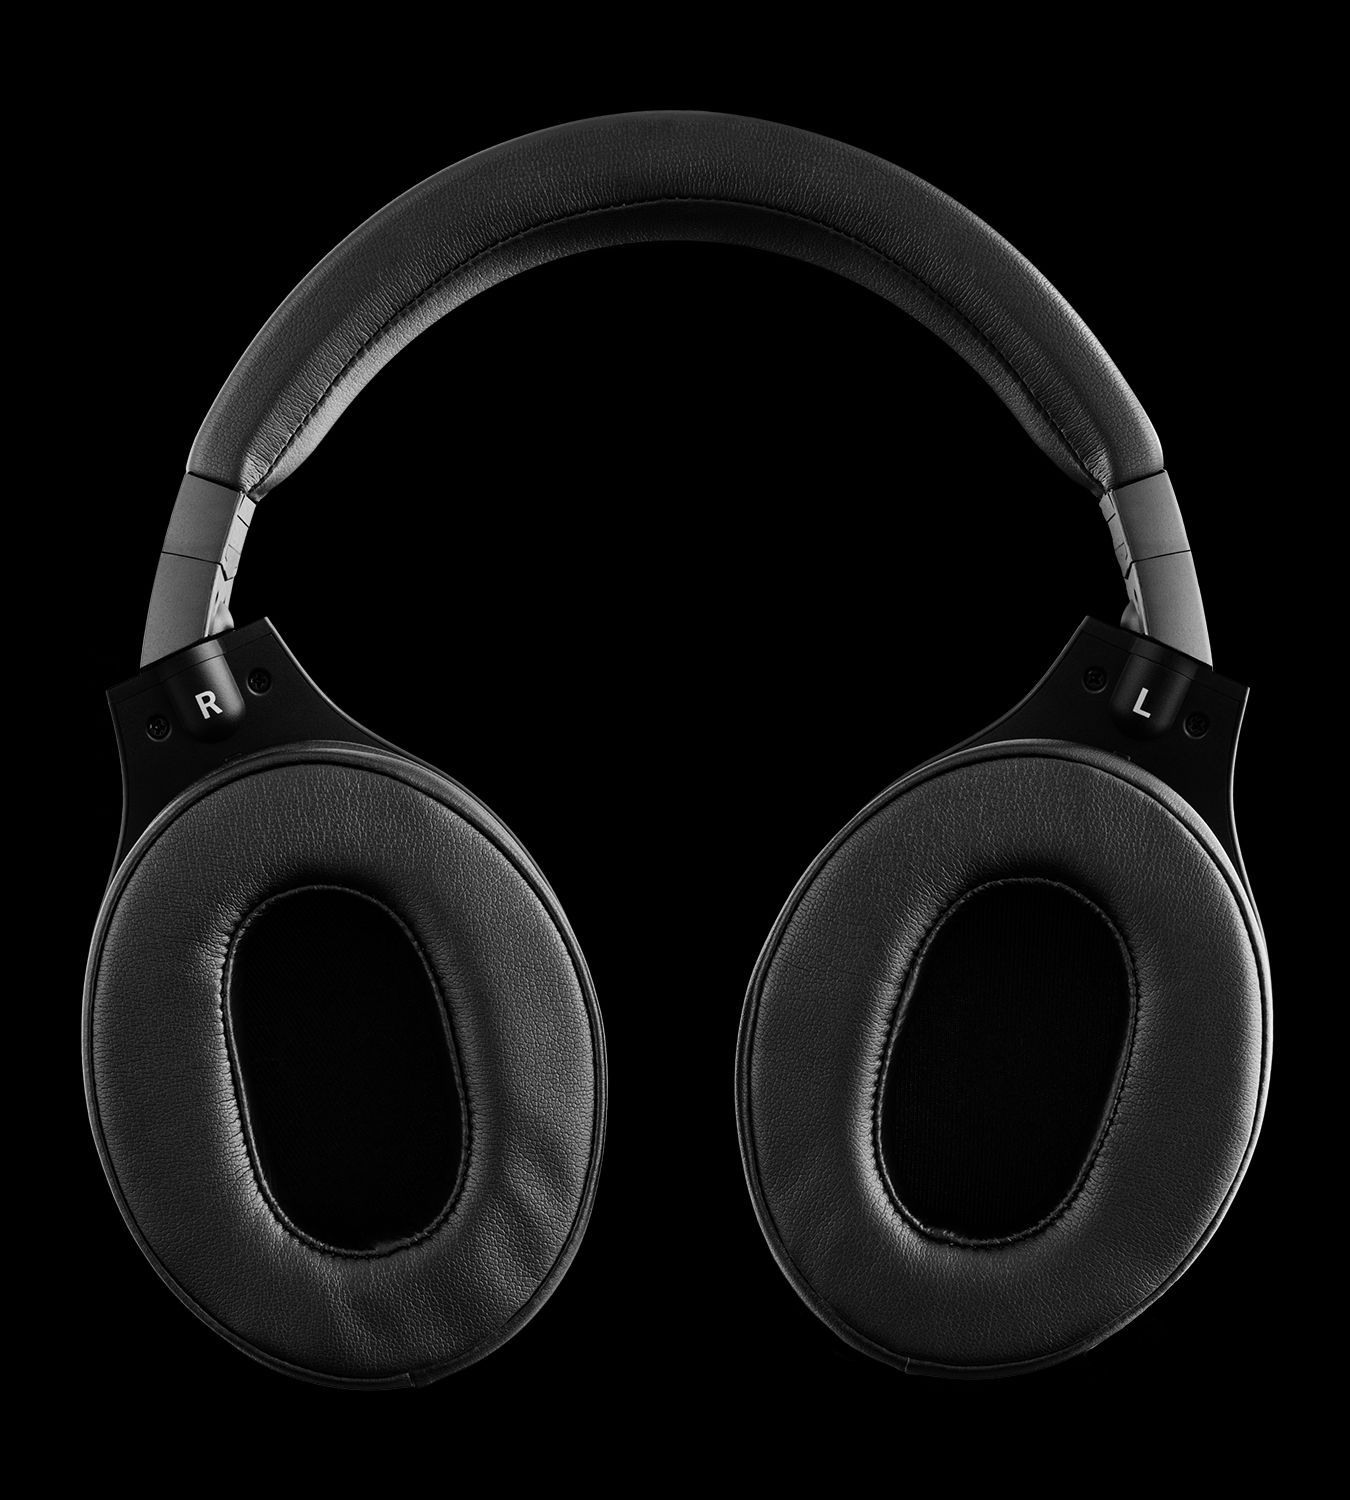 Audix A152 Professioneller geschlossener Studio-Referenz-Kopfhörer mit Bassboost